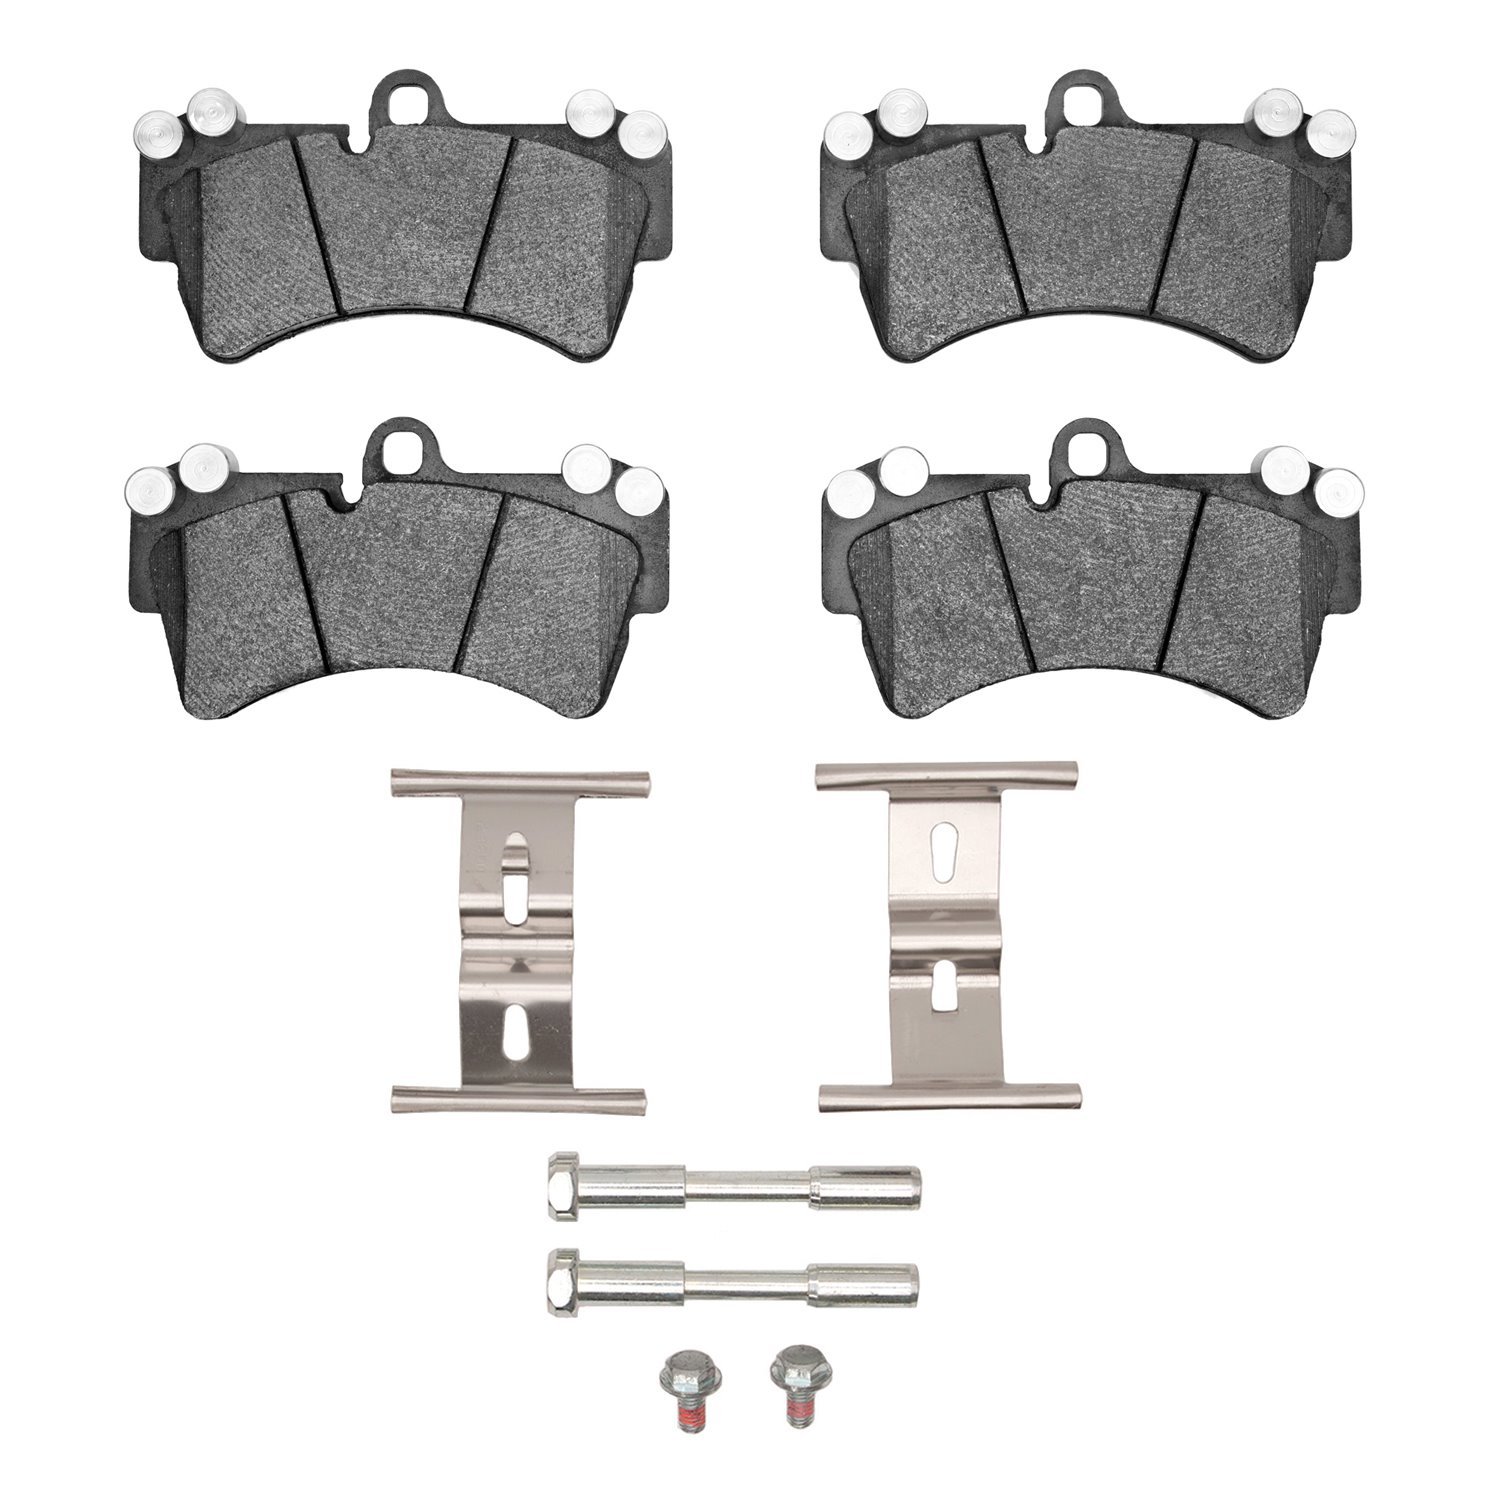 1551-0977-01 5000 Advanced Low-Metallic Brake Pads & Hardware Kit, 2003-2015 Multiple Makes/Models, Position: Front